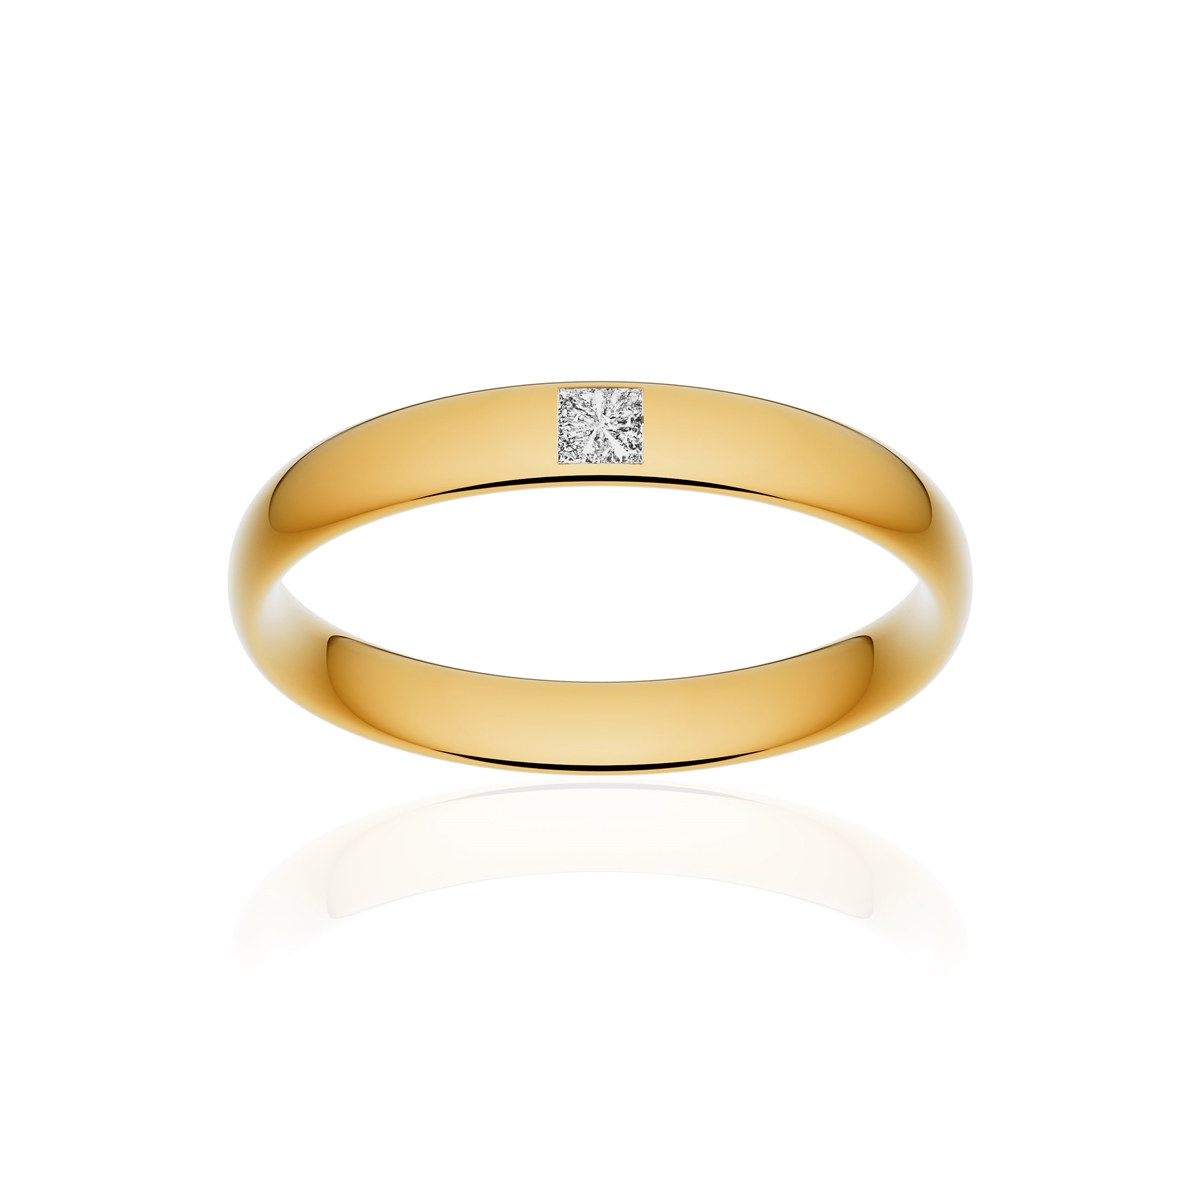 Alliance or 750 jaune poli demi-jonc confort 3,5mm diamant princesse